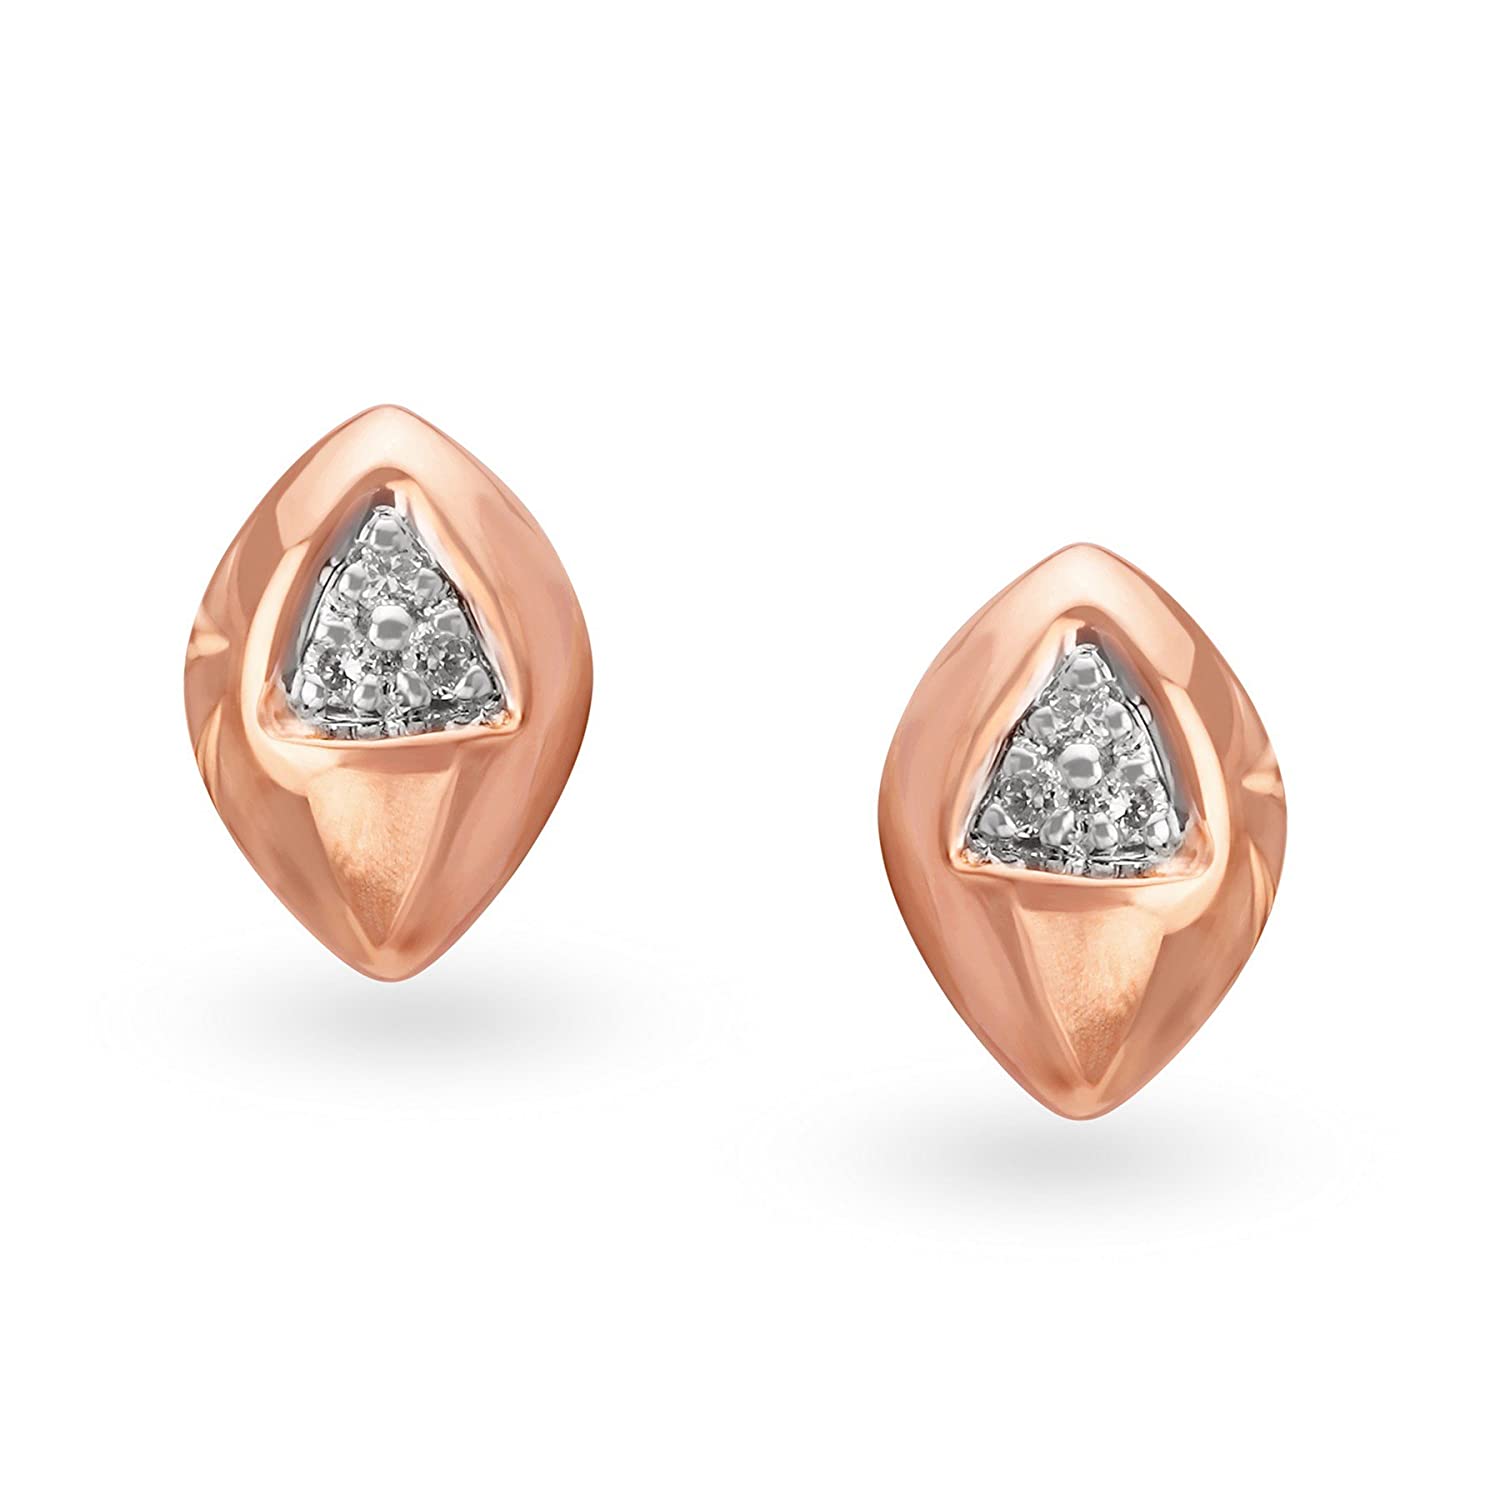 Mia by Tanishq 18 KT Rose Gold Oval Swirl Diamond Stud Earrings Rose Gold  18kt Stud Earring Price in India - Buy Mia by Tanishq 18 KT Rose Gold Oval  Swirl Diamond